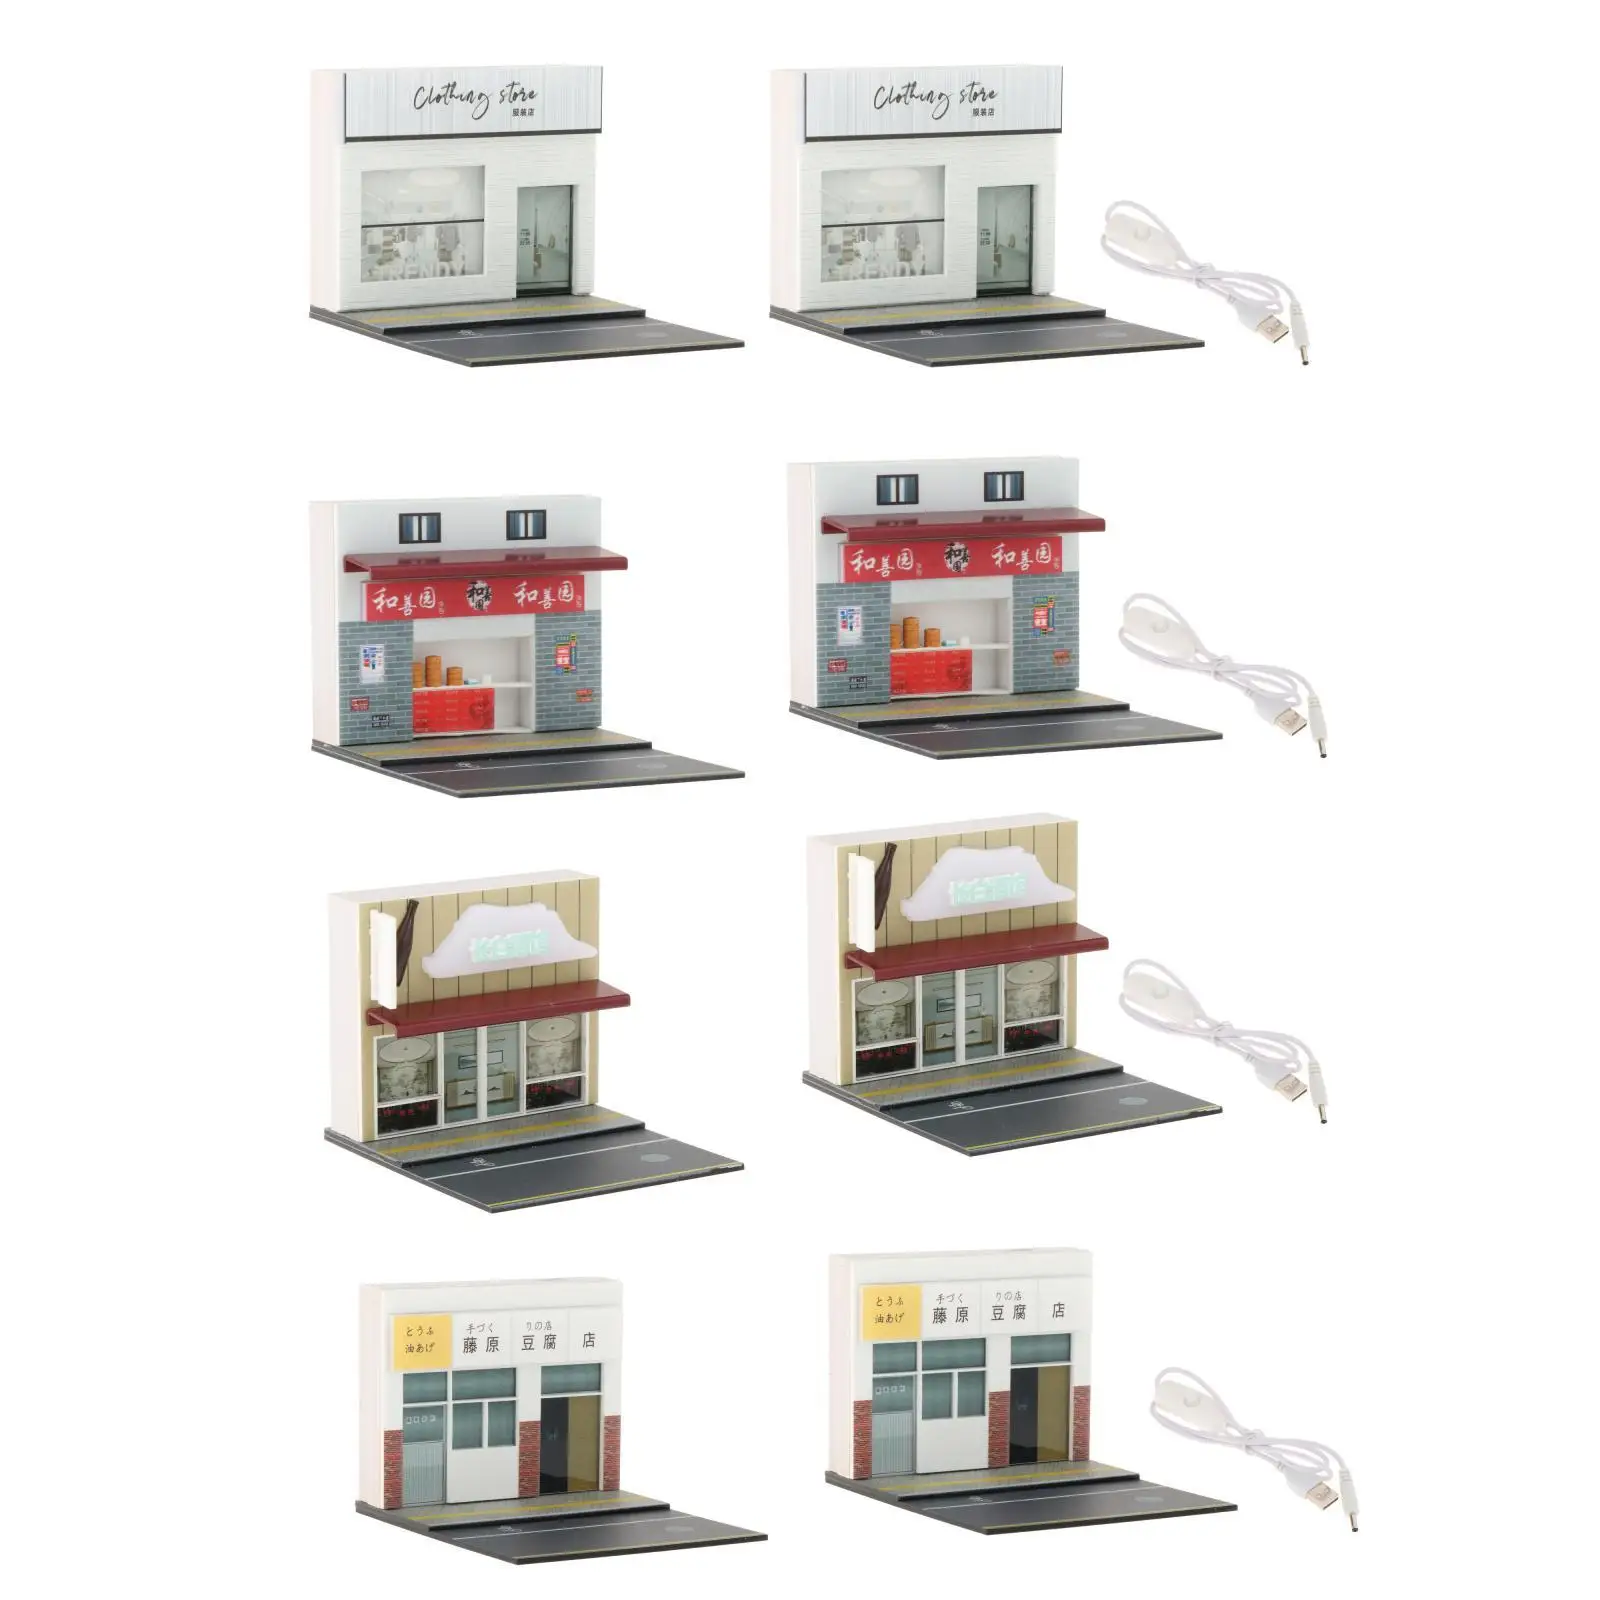 1:64 Diorama Model Assemble Diy Buildings Kits for Dollhouse Decoration Street Building Scene Props Micro Landscape Ornament